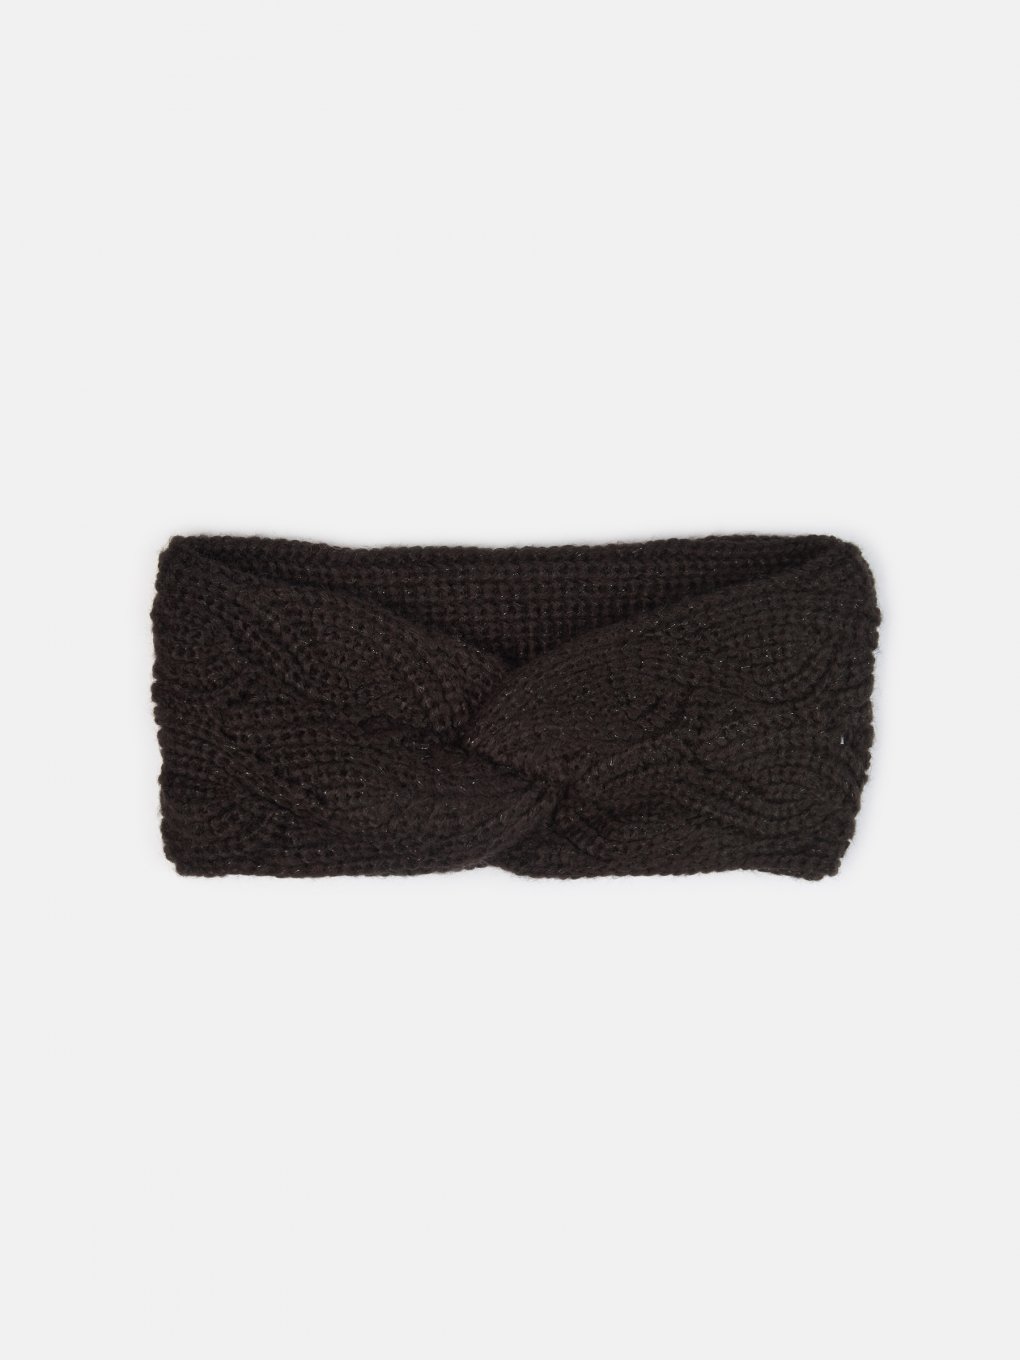 Knitted headband with metallic fibre